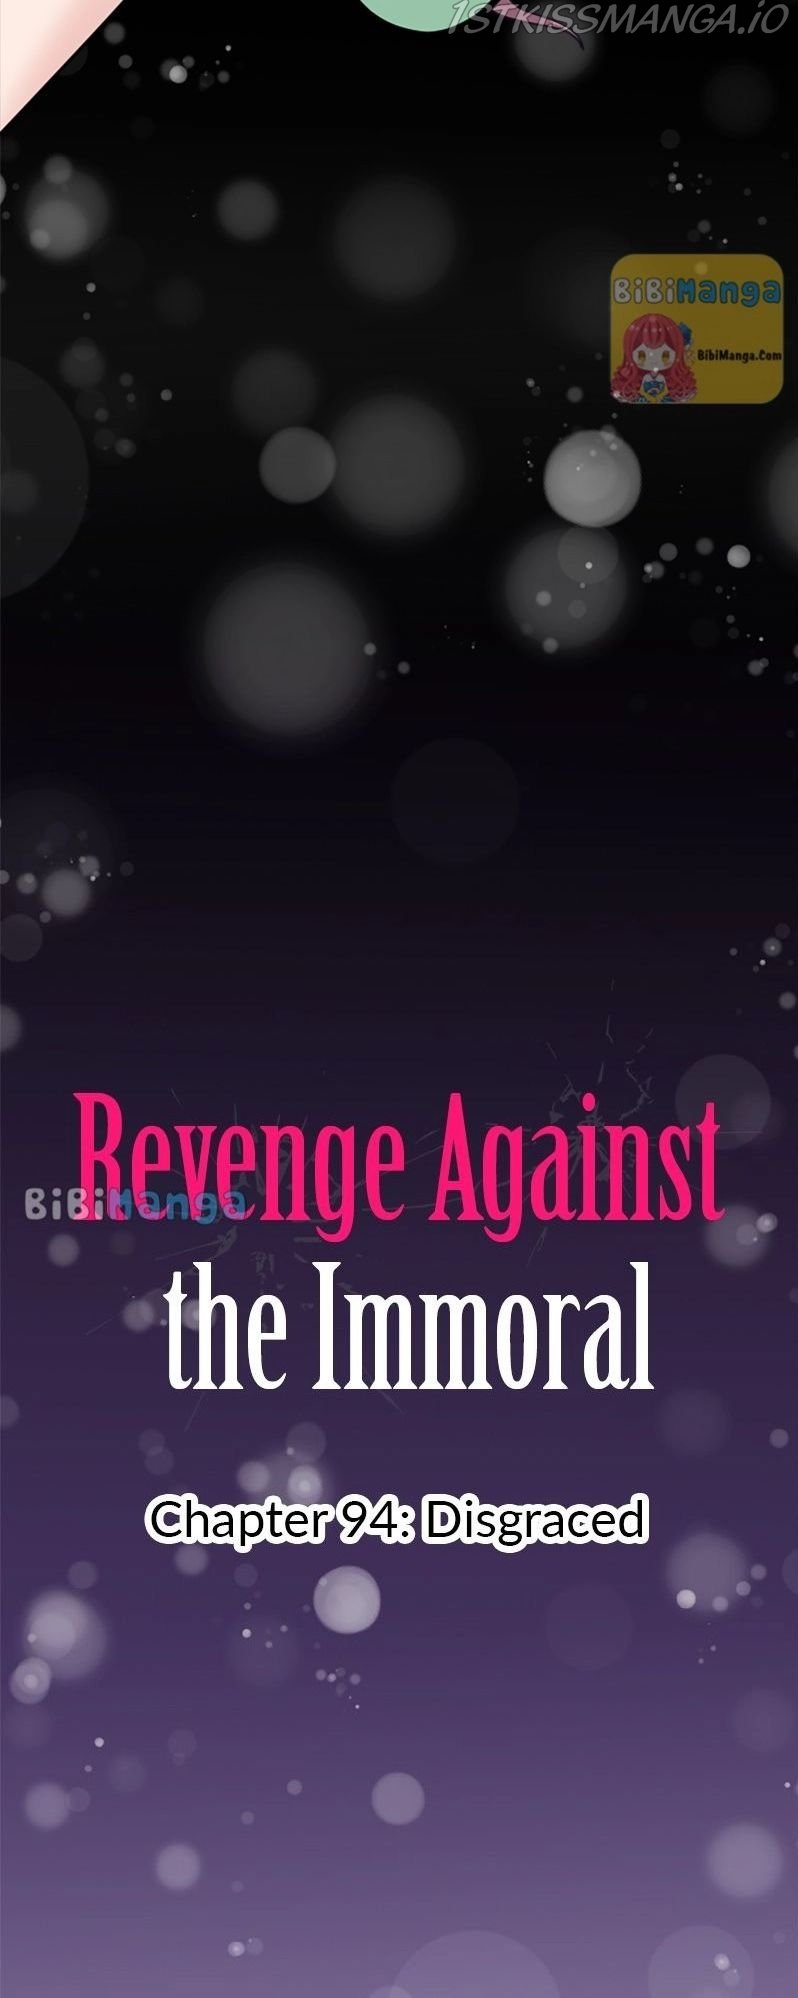 Revenge Against the Immoral chapter 94